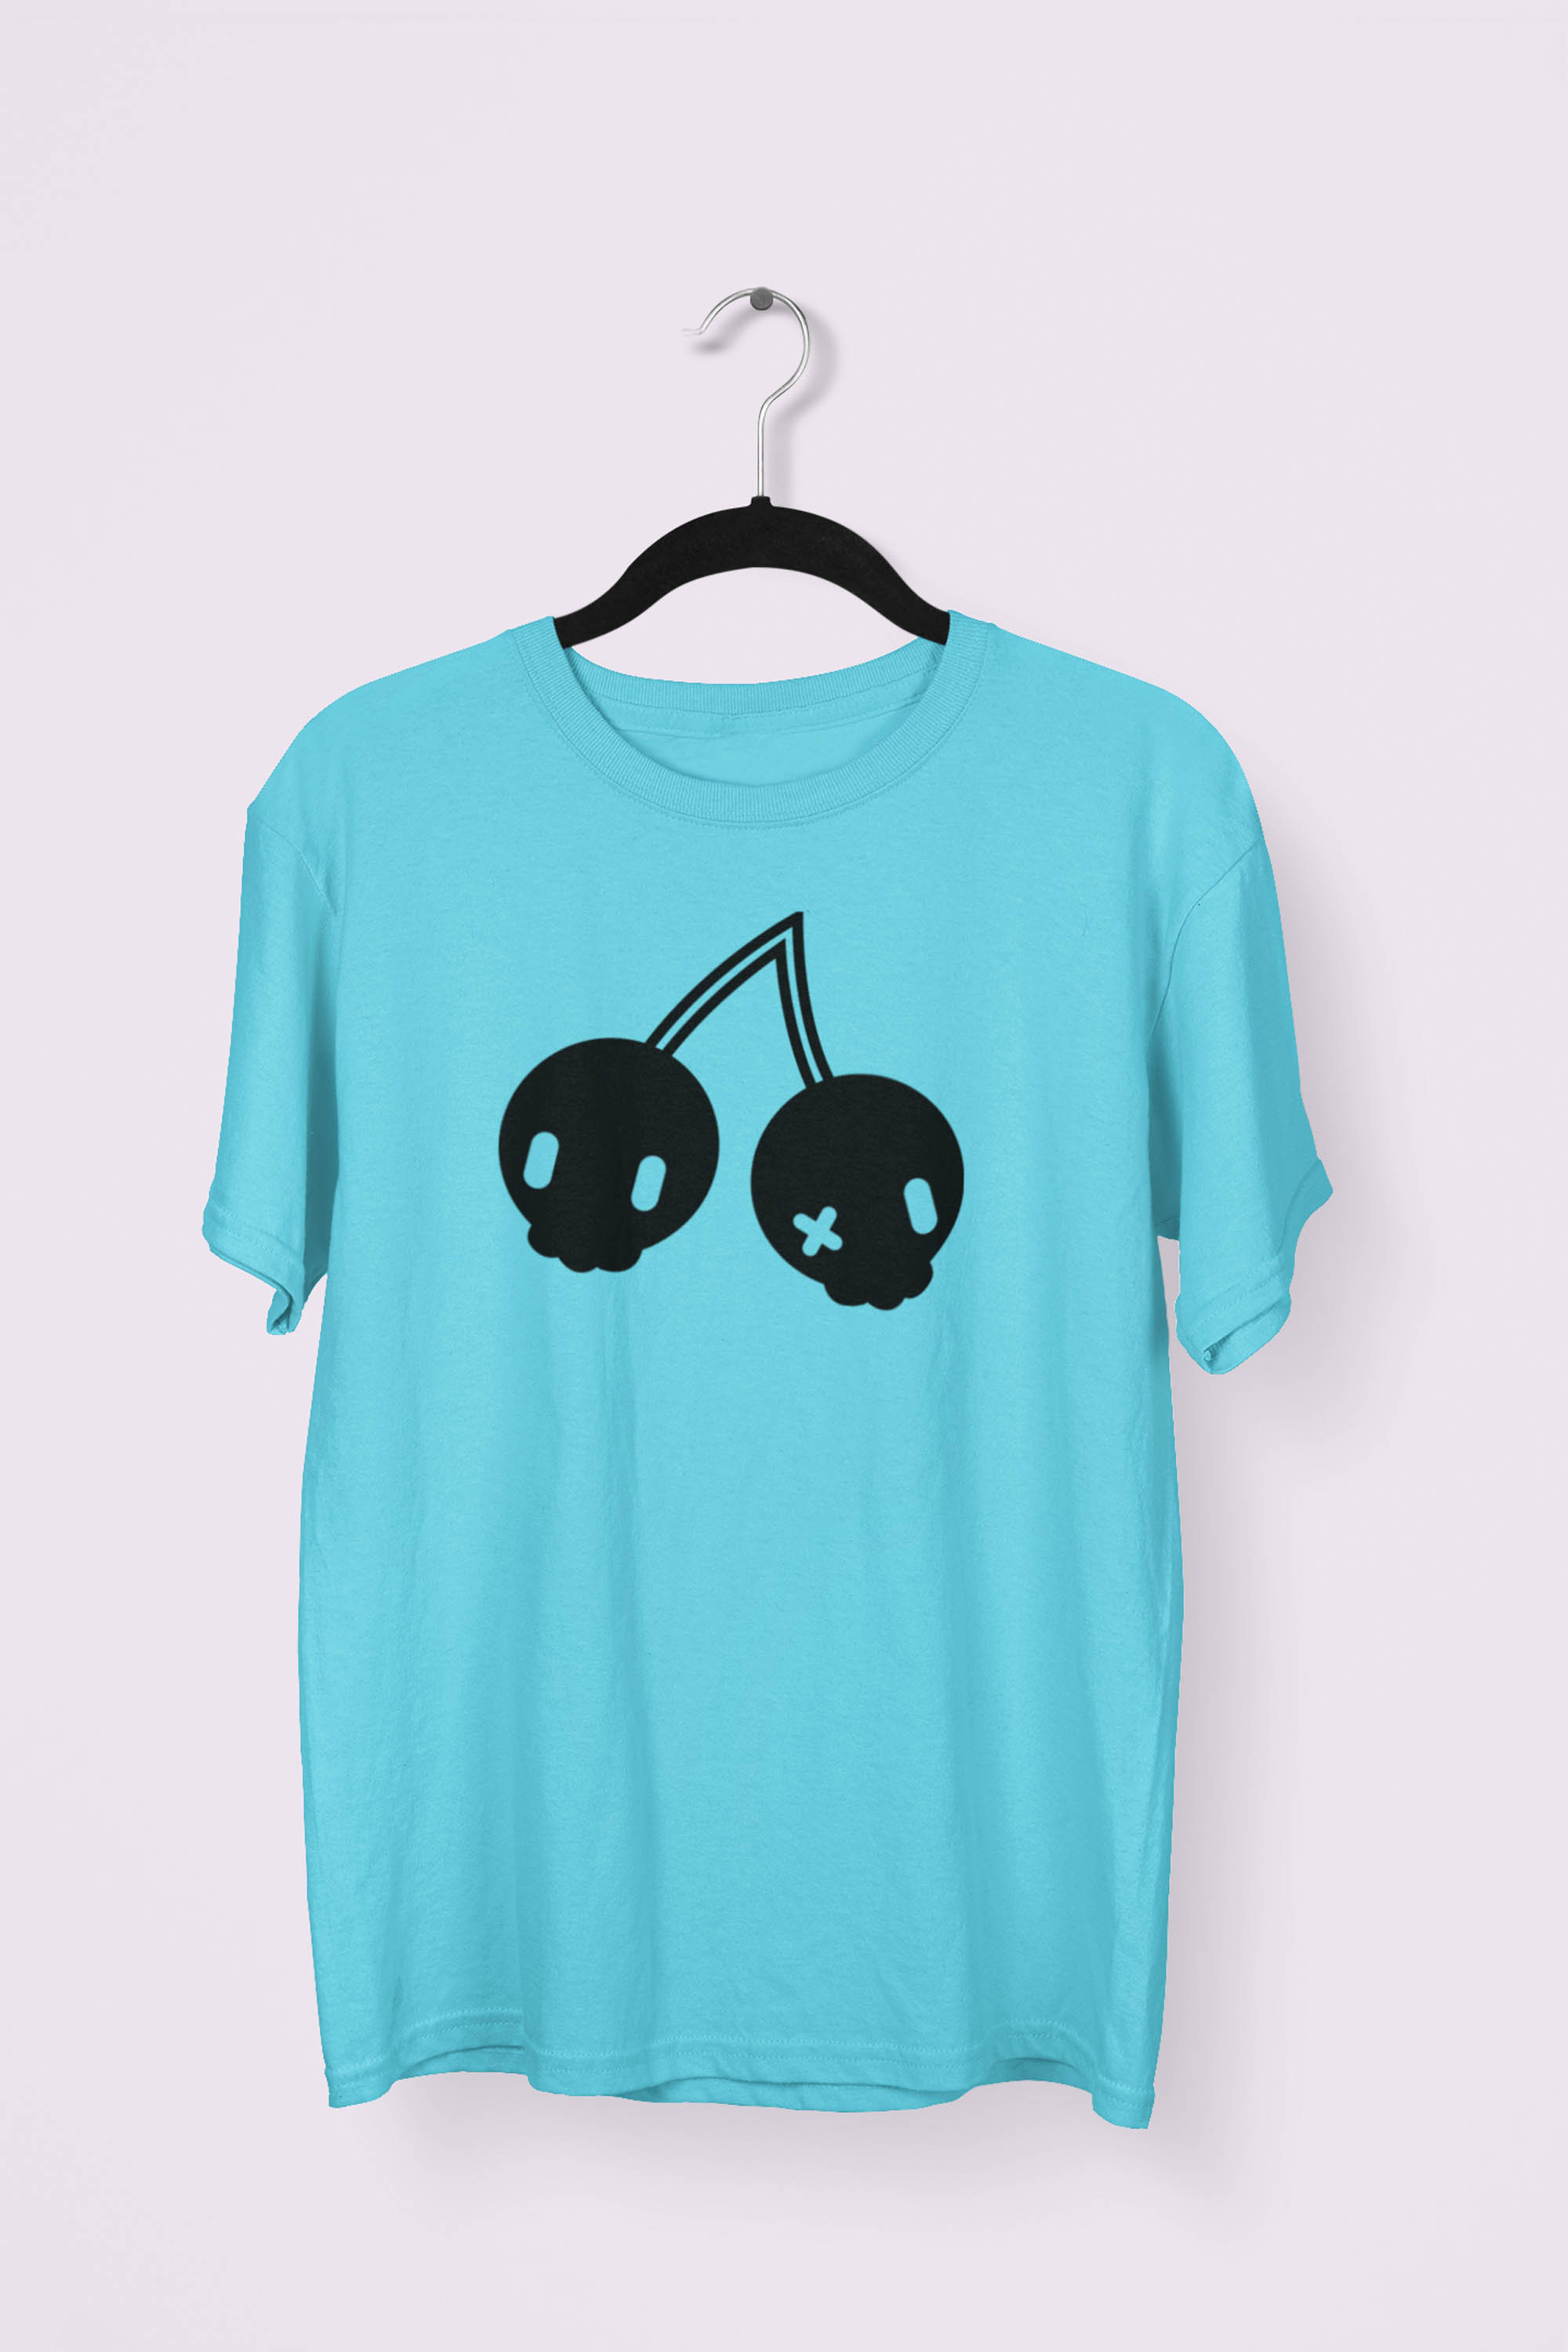 Cherry Skulls T-shirt by Dokkirii - Teal